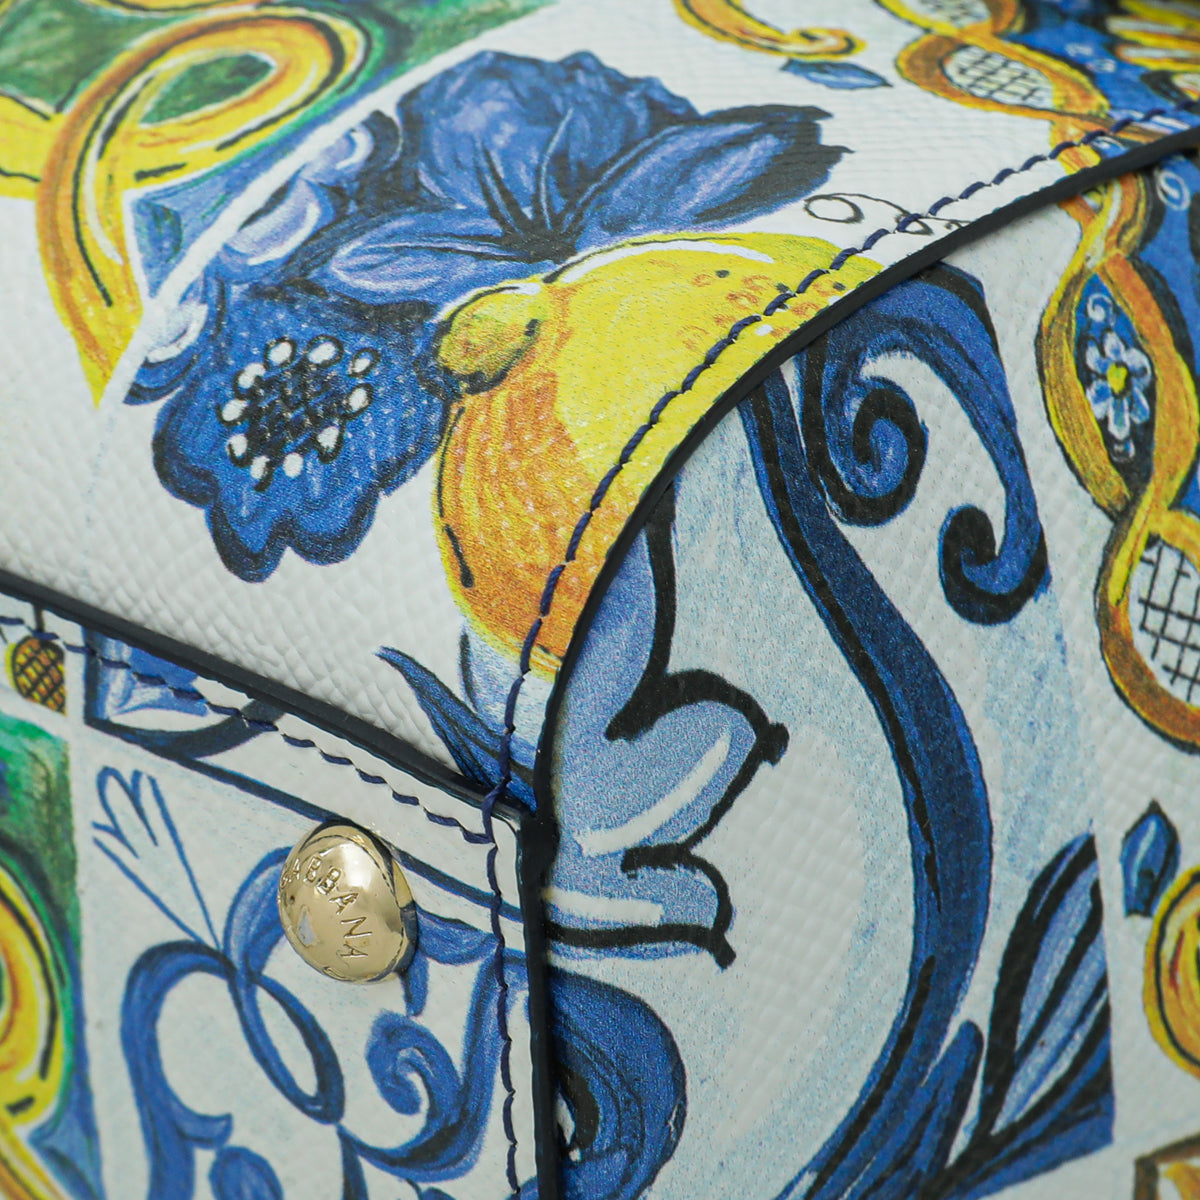 Dolce & Gabbana White Multicolor Majolica Print Sicily Bag